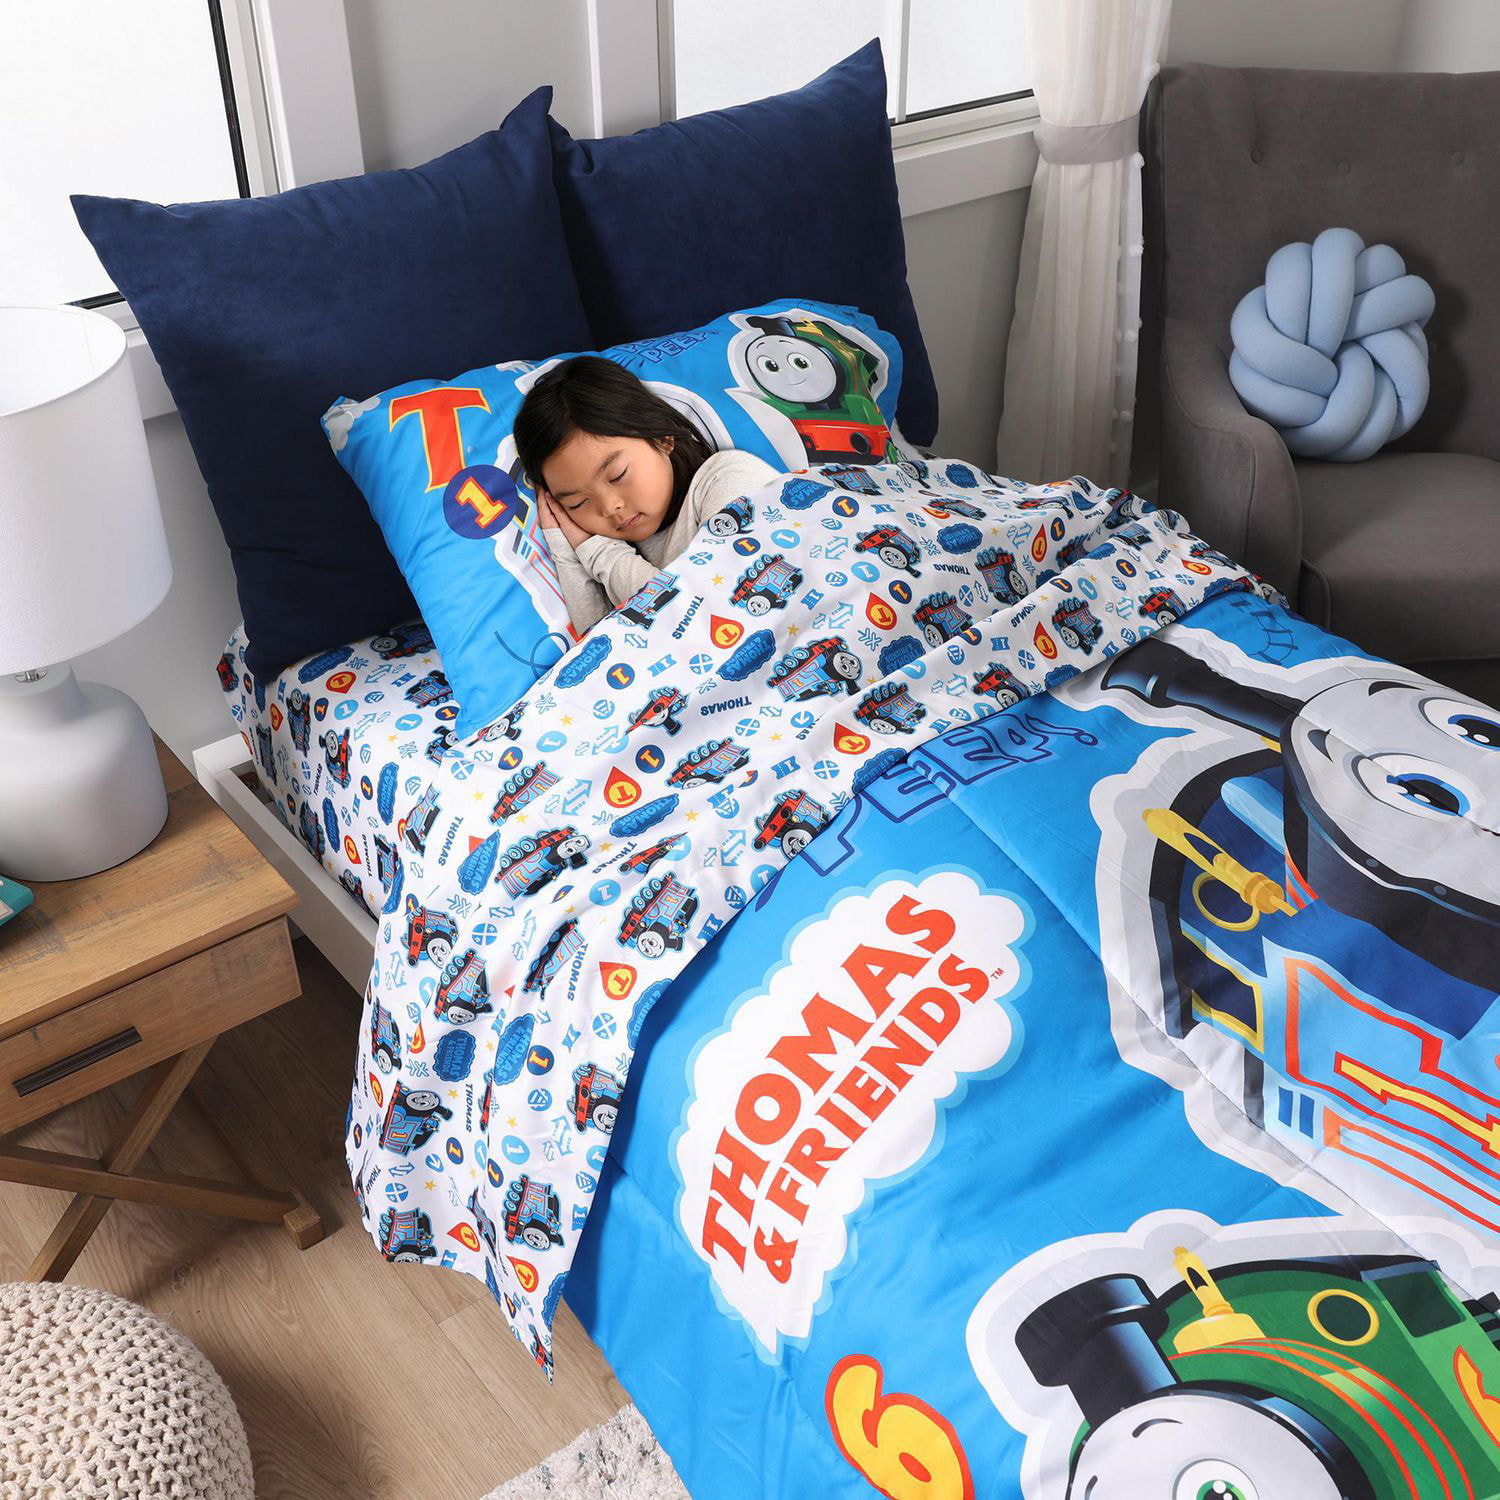 Nemcor Paw Patrol 3-Piece Toddler Reversible Comforter Set, Blue